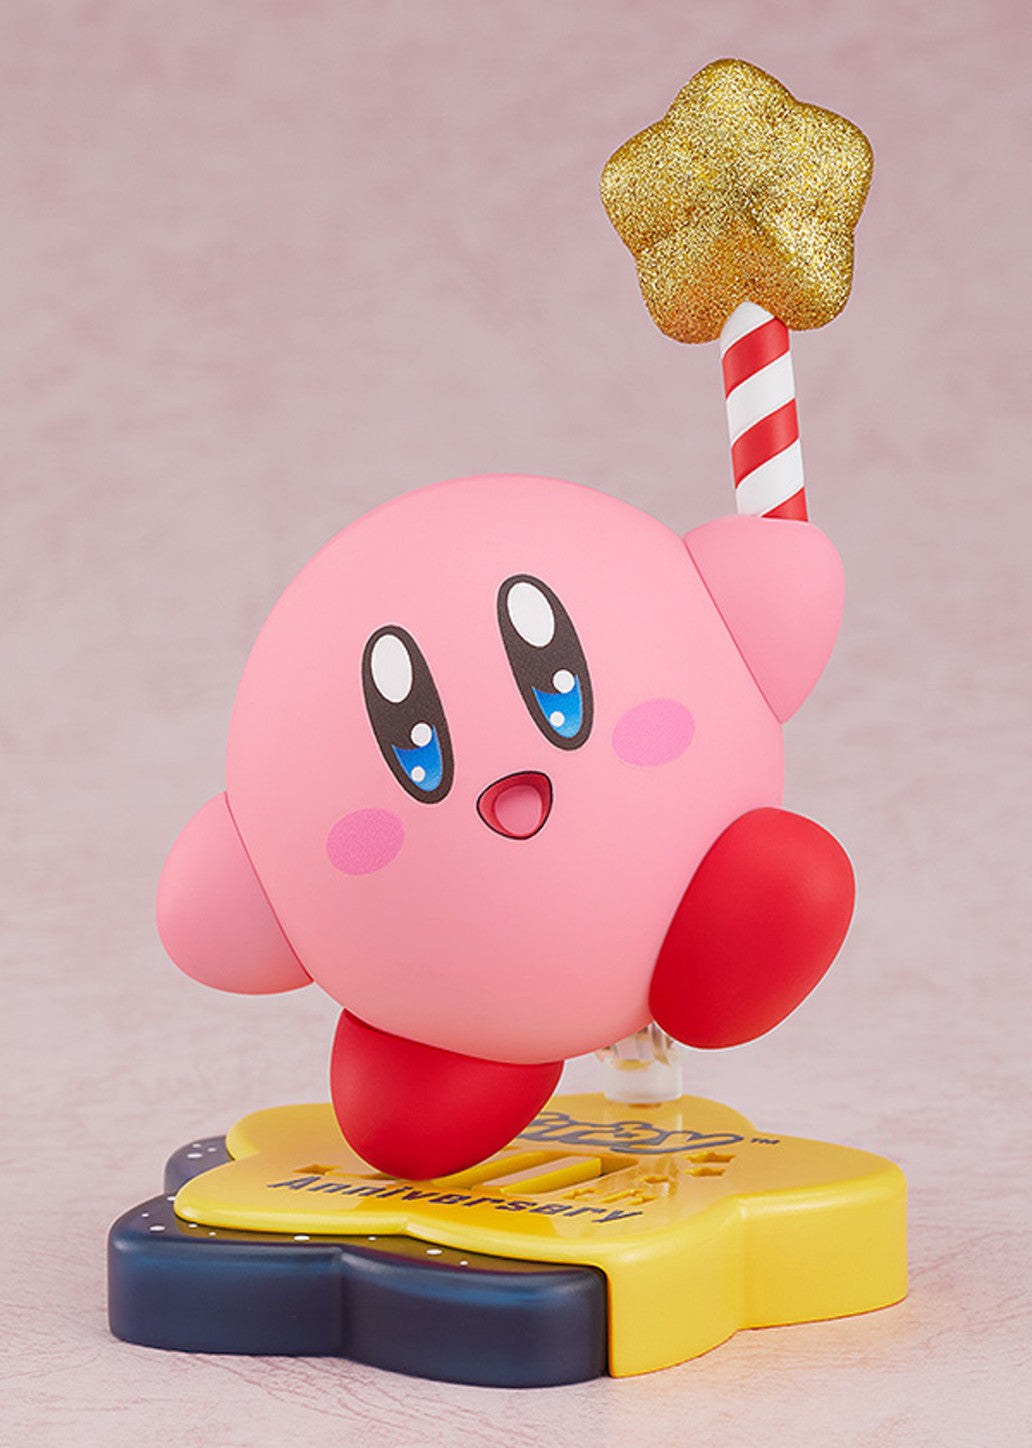 Nendoroid: Kirby [30th Anniversary Edition]